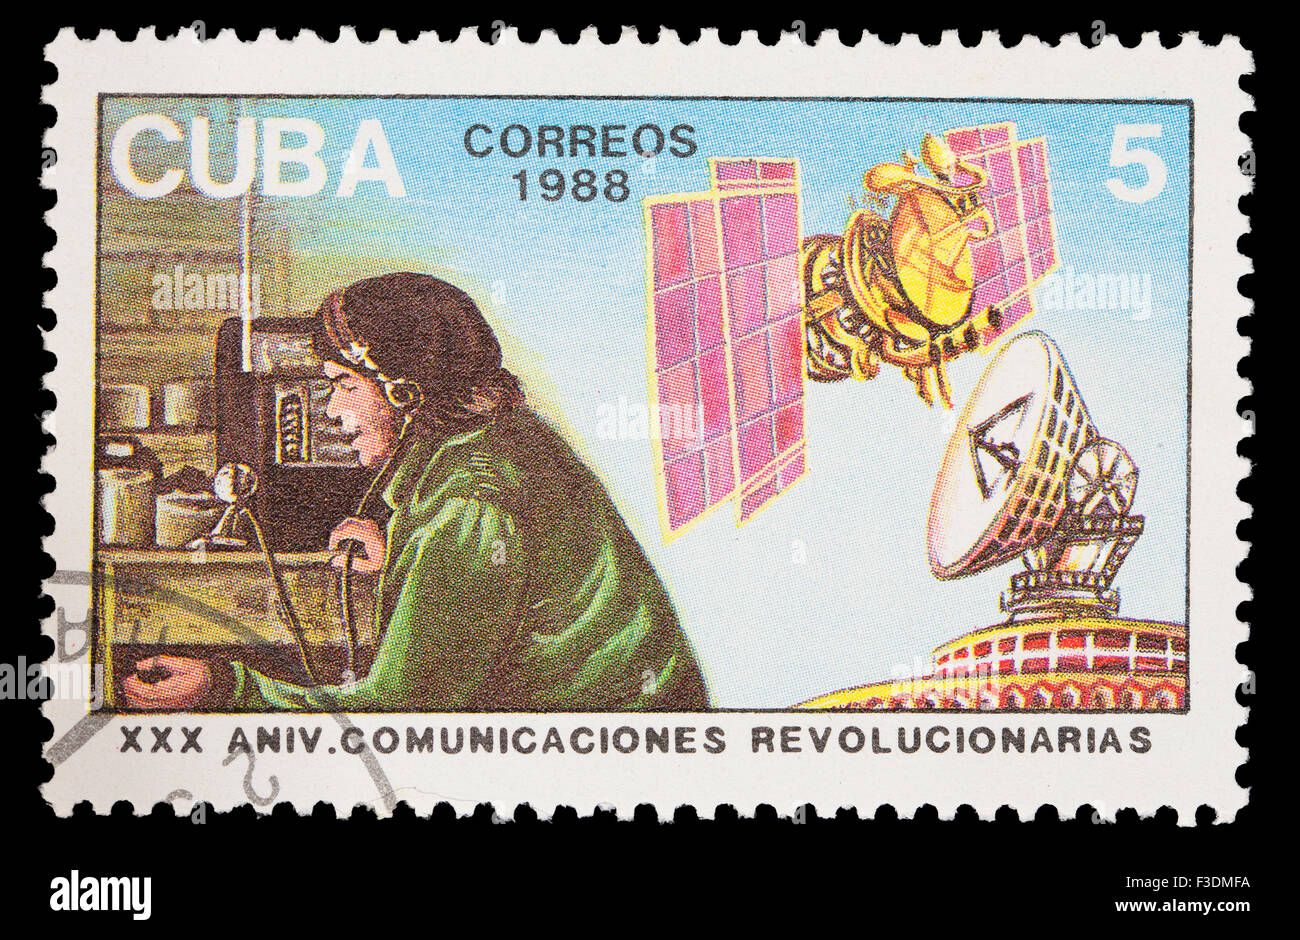 CUBA - CIRCA 1988: A postage stamp printed in Cuba shows radio and satelites as Telecommunication revolution, circa 1988 Stock Photo